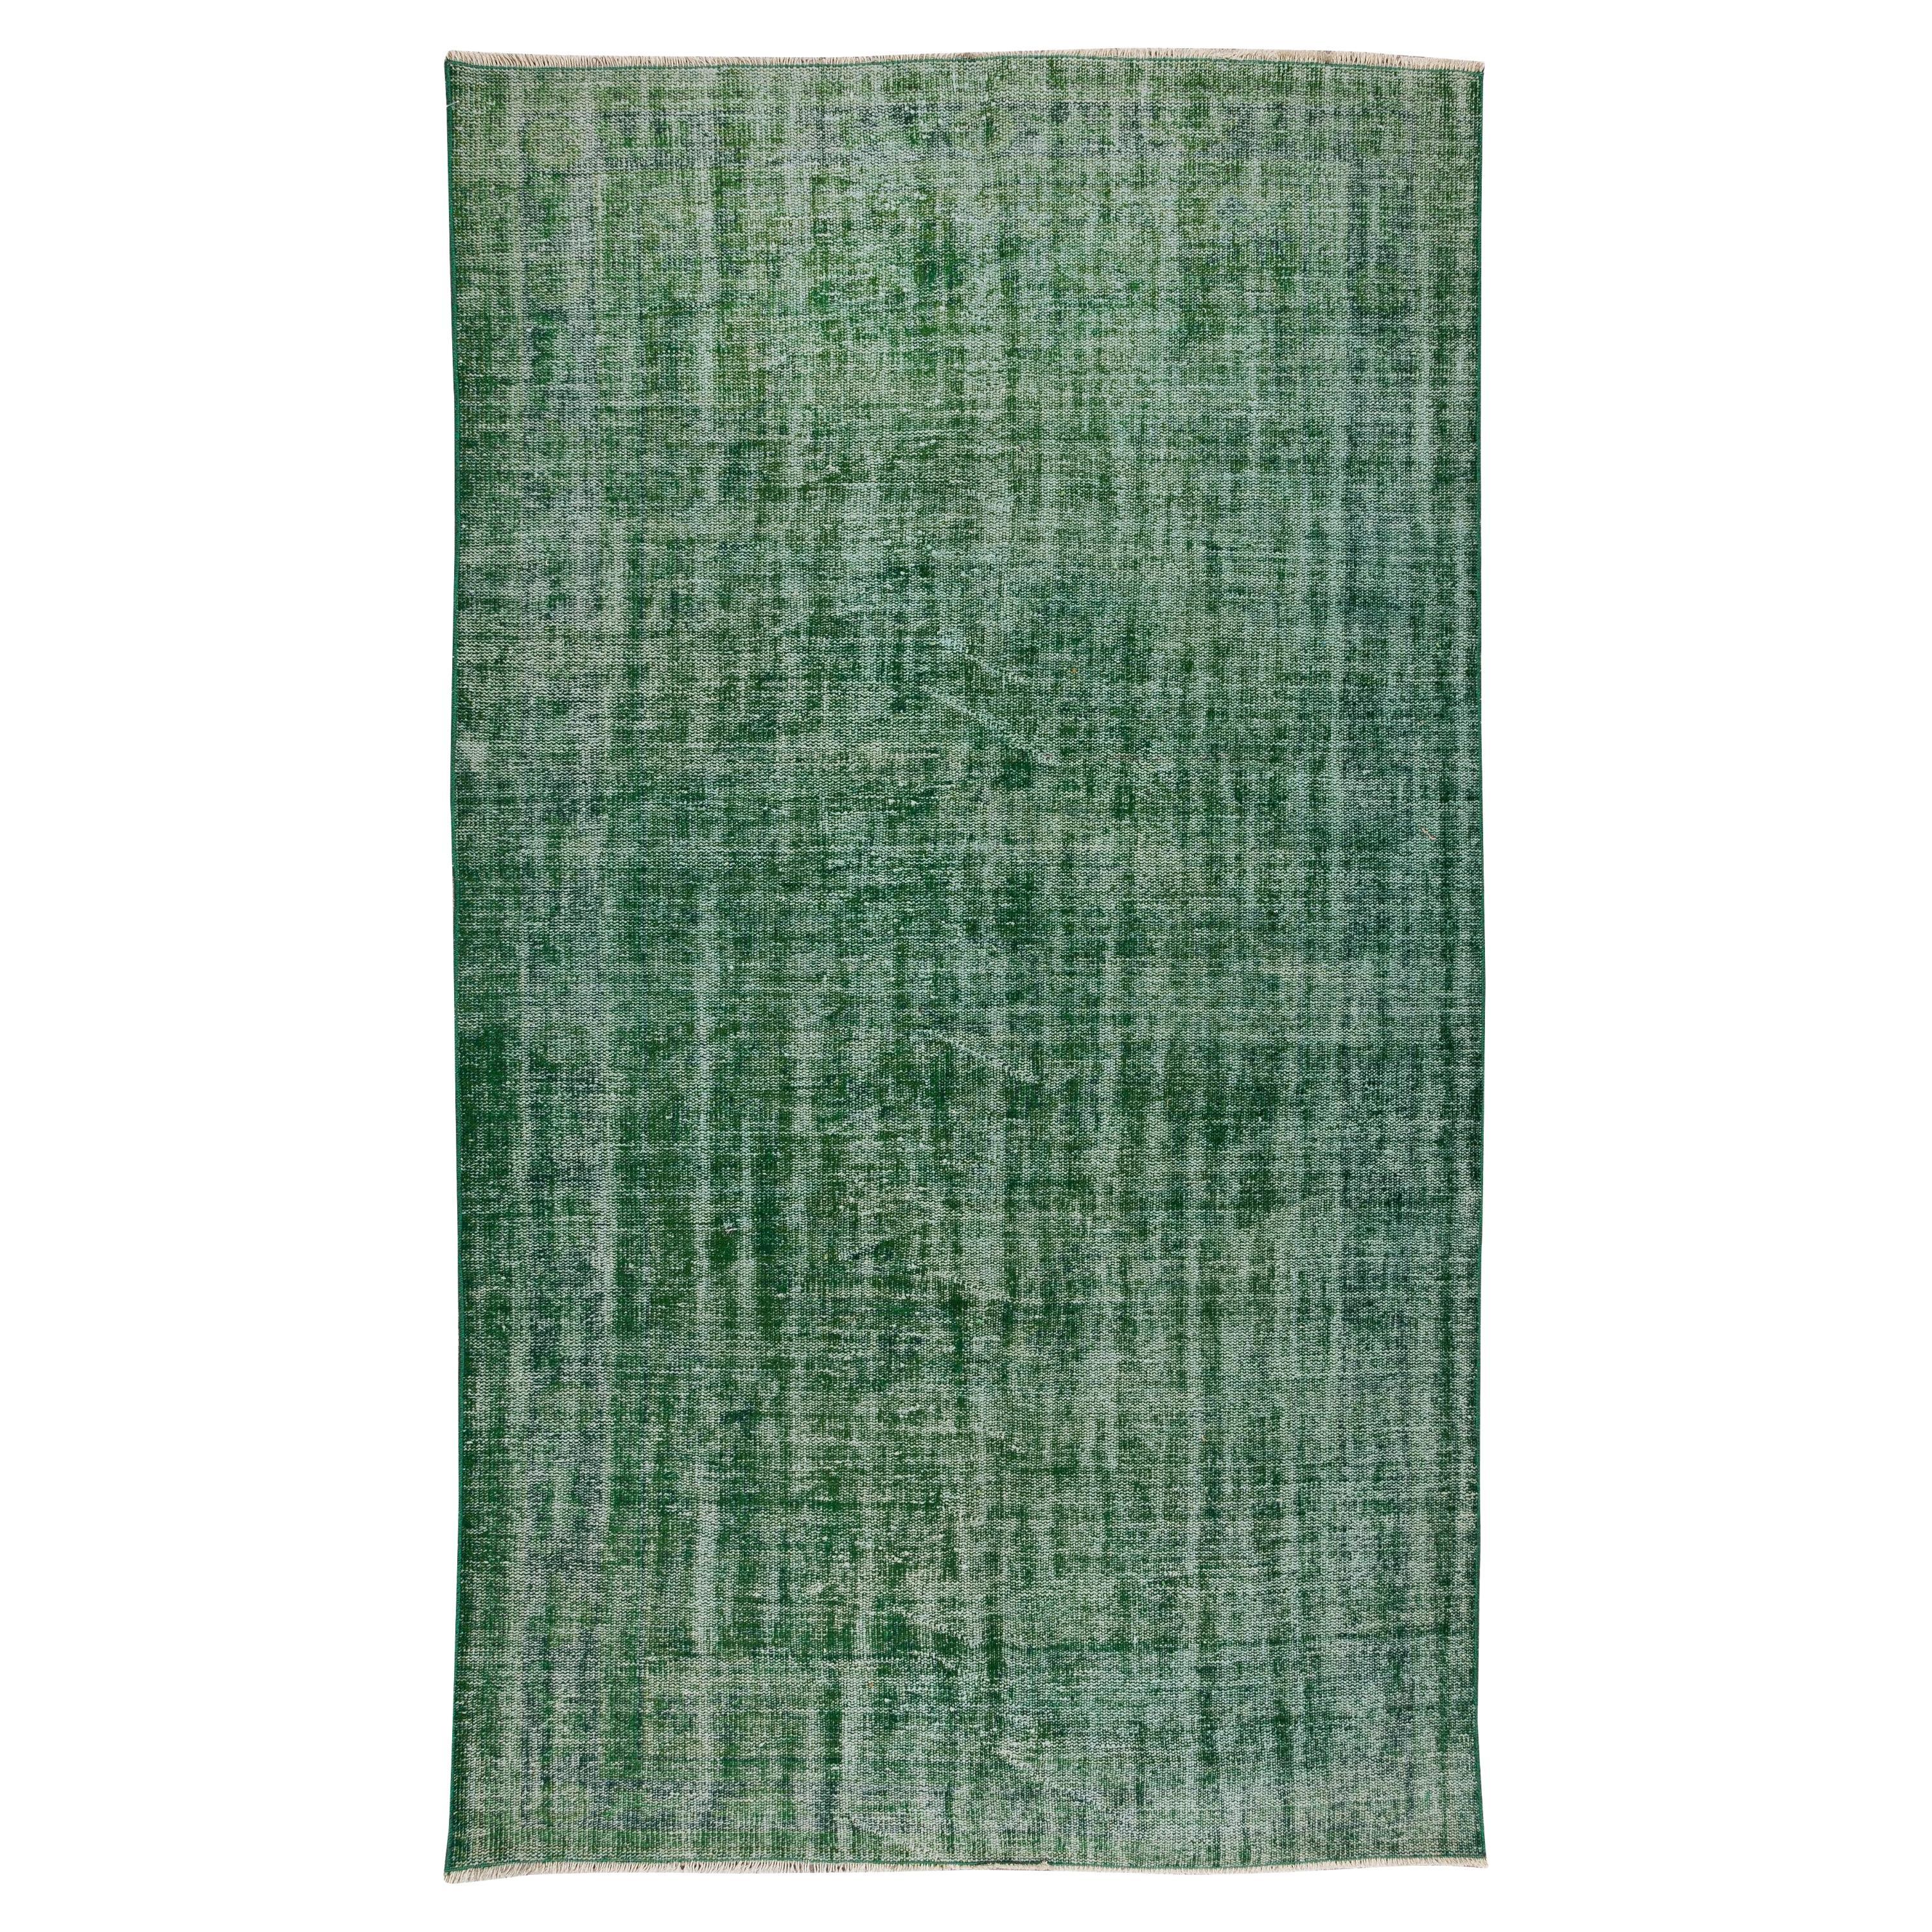 5.7x9.8 Ft Handmade Vintage Turkish Rug, Plain Green Contemporary Wool Carpet